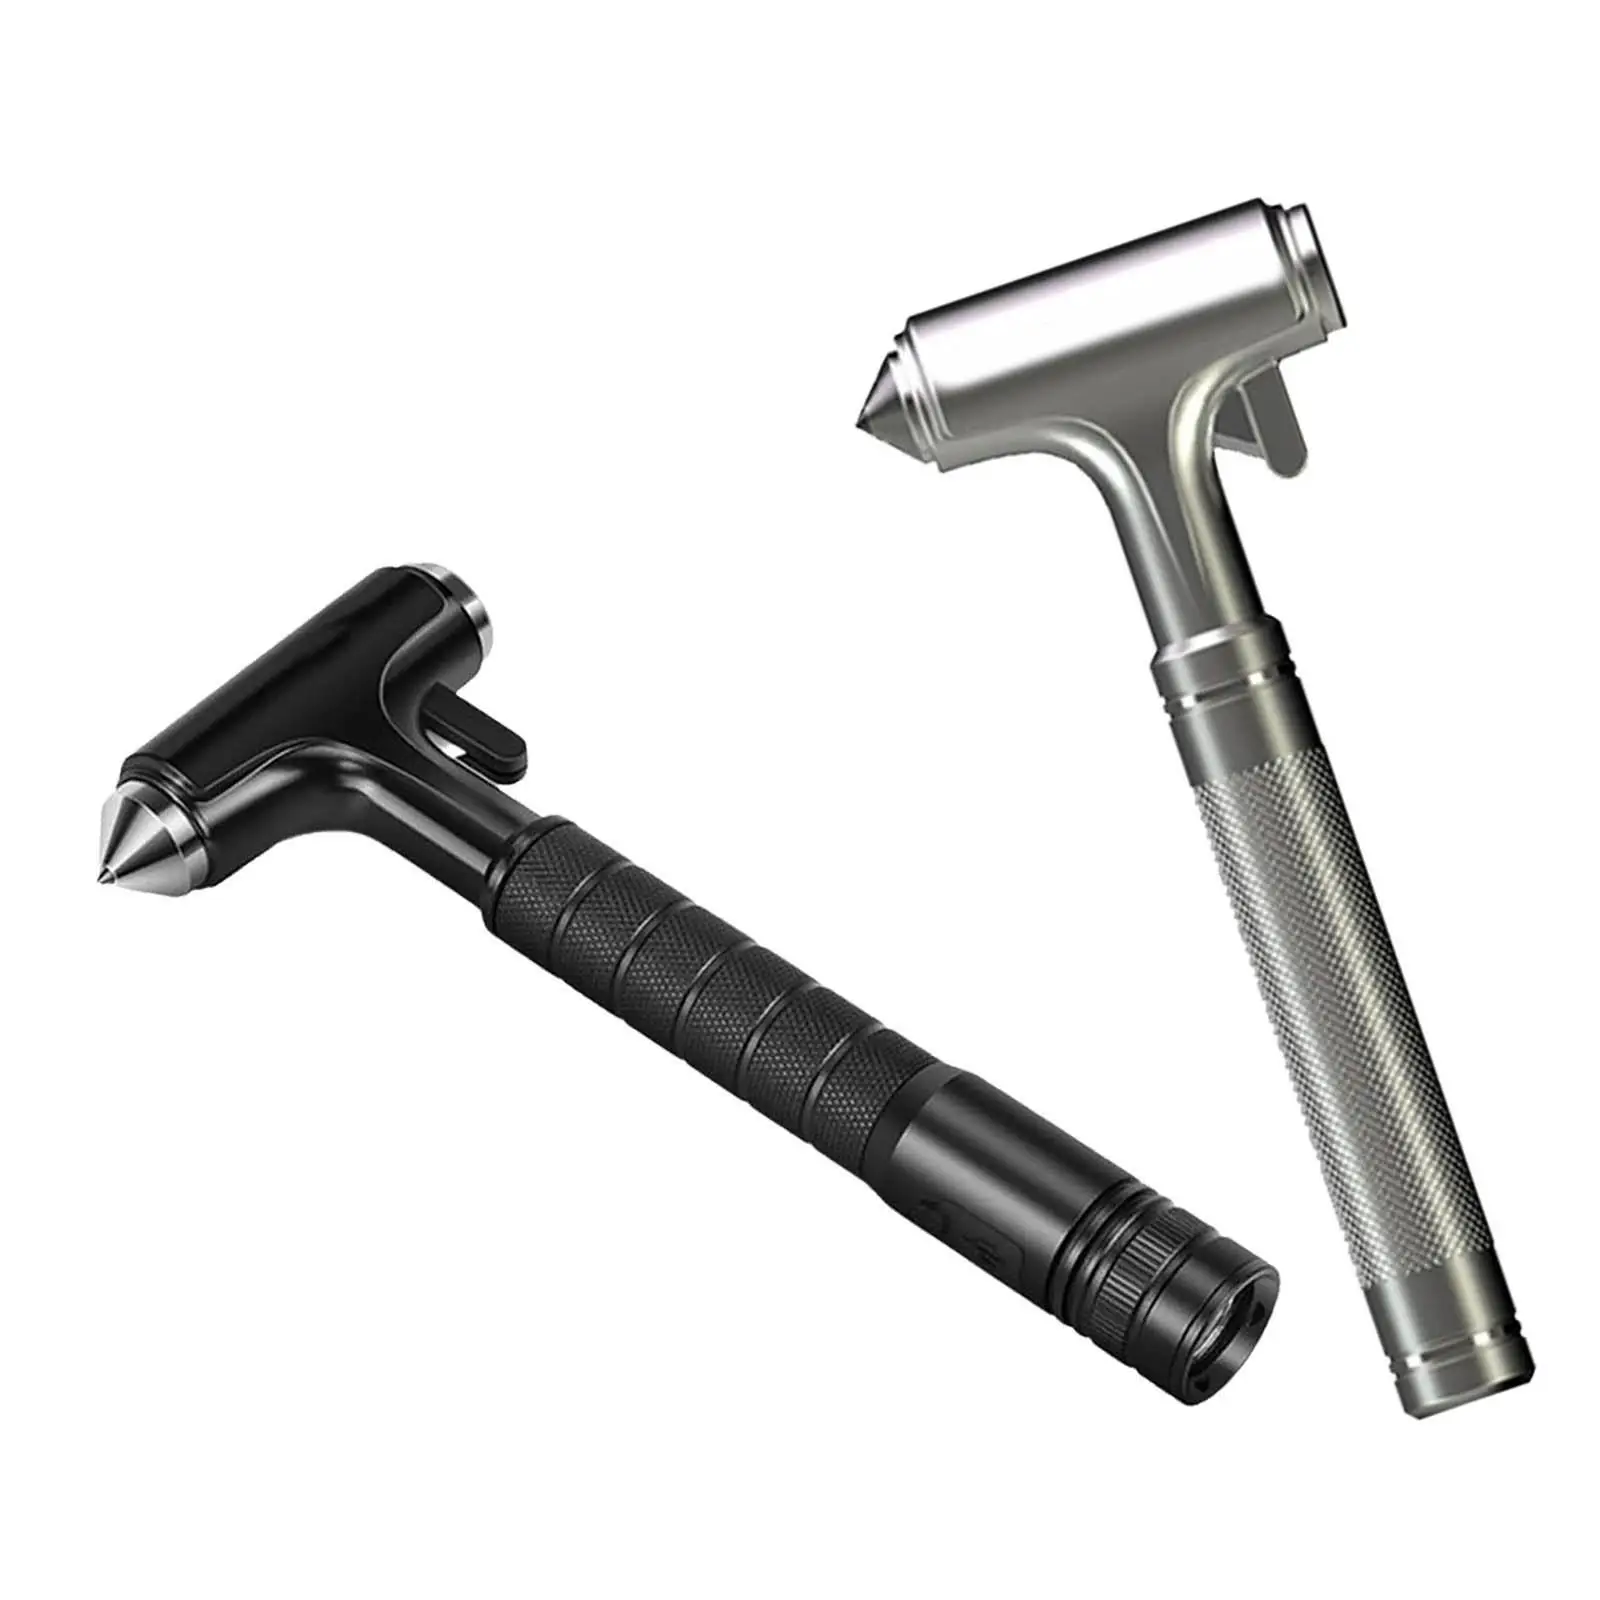 Car Safety Hammer Built in Seat Belt Cutter Portable Emergecy Cars Supplies